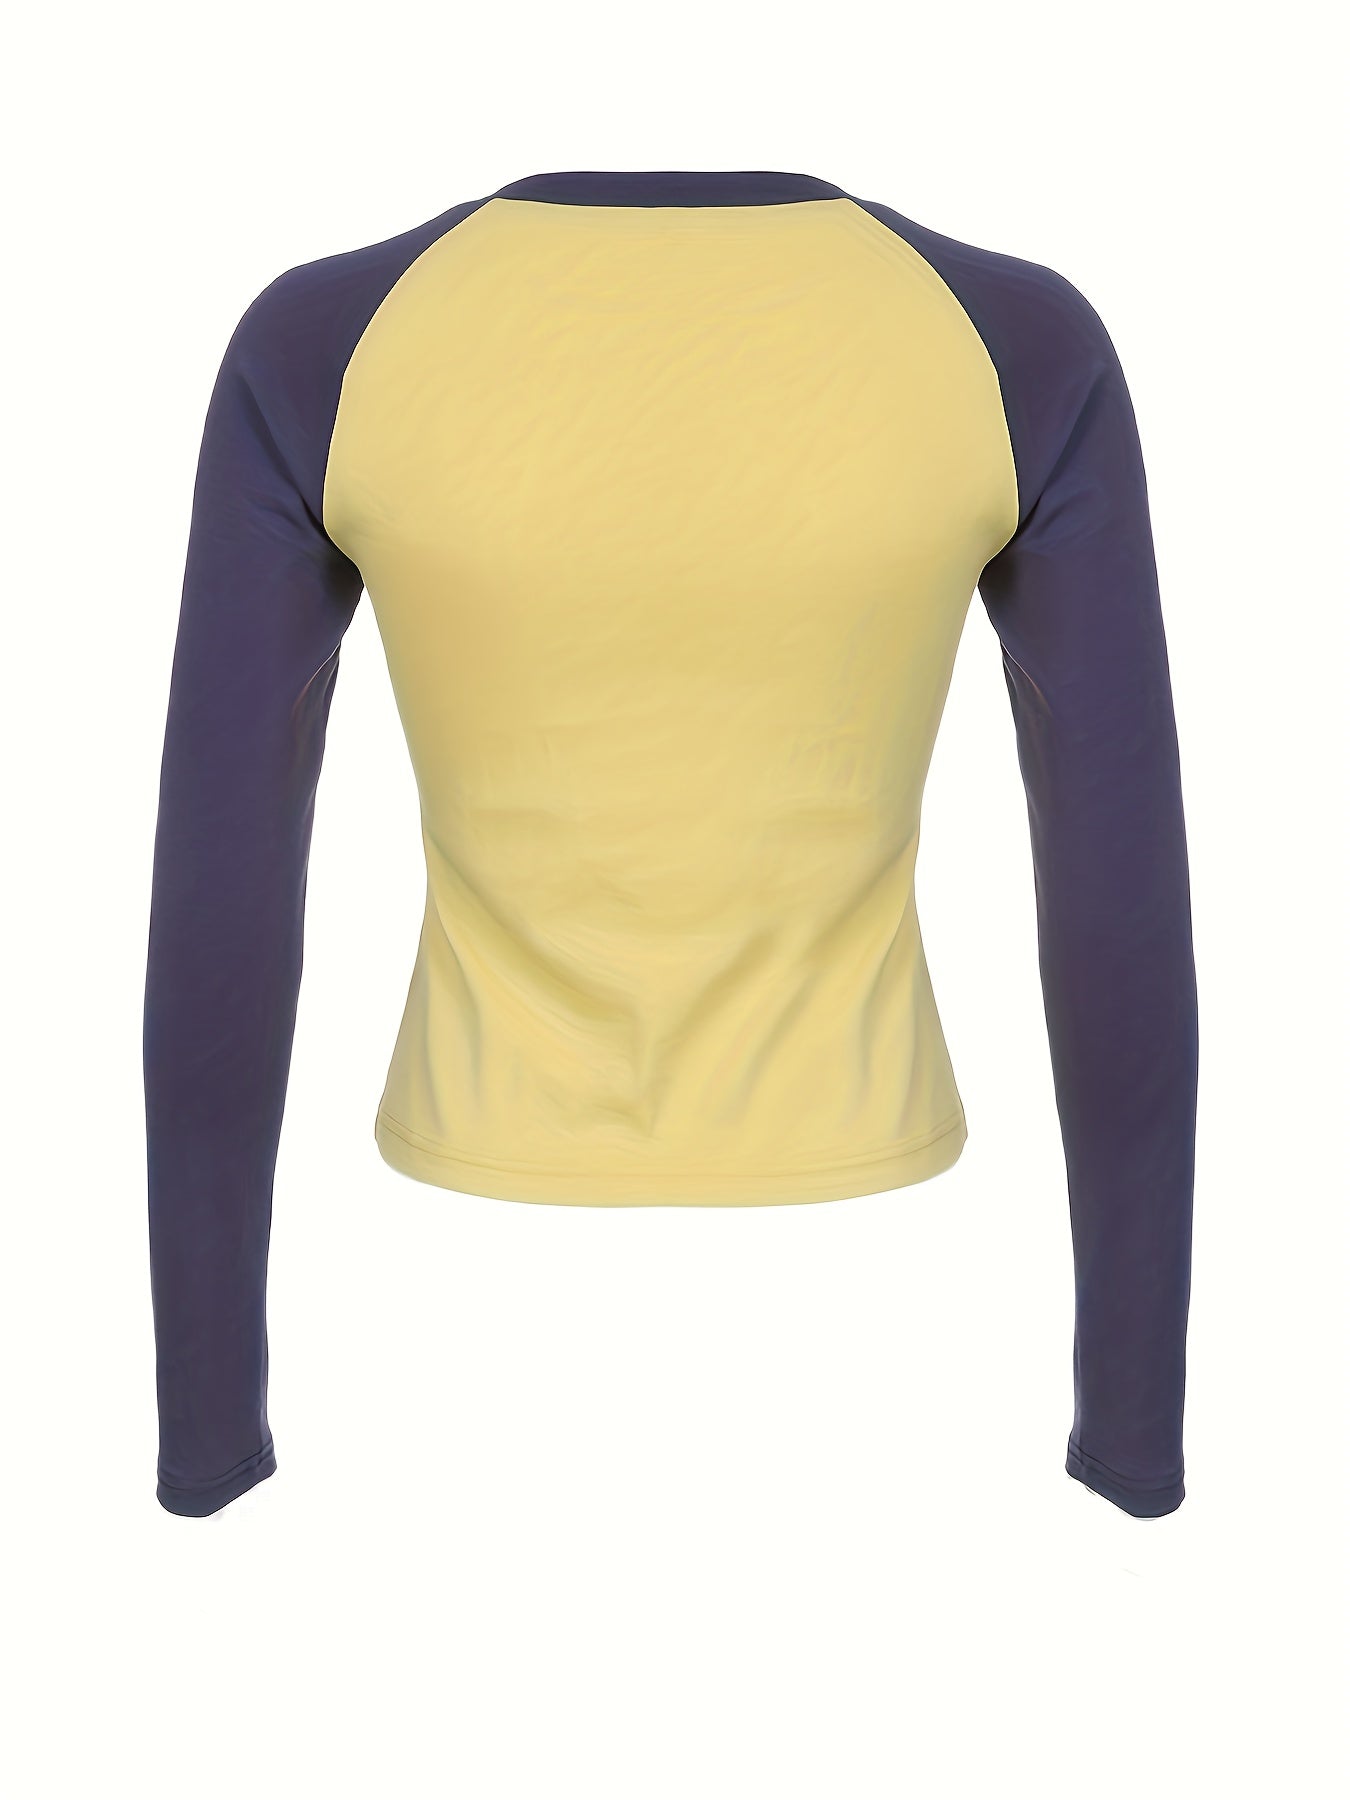 Vzyzv Long Sleeve Raglan Casual Sports Shirts,Fashion Letter Graphic Y2k Style Street Long Sleeve Top,Women's Tops